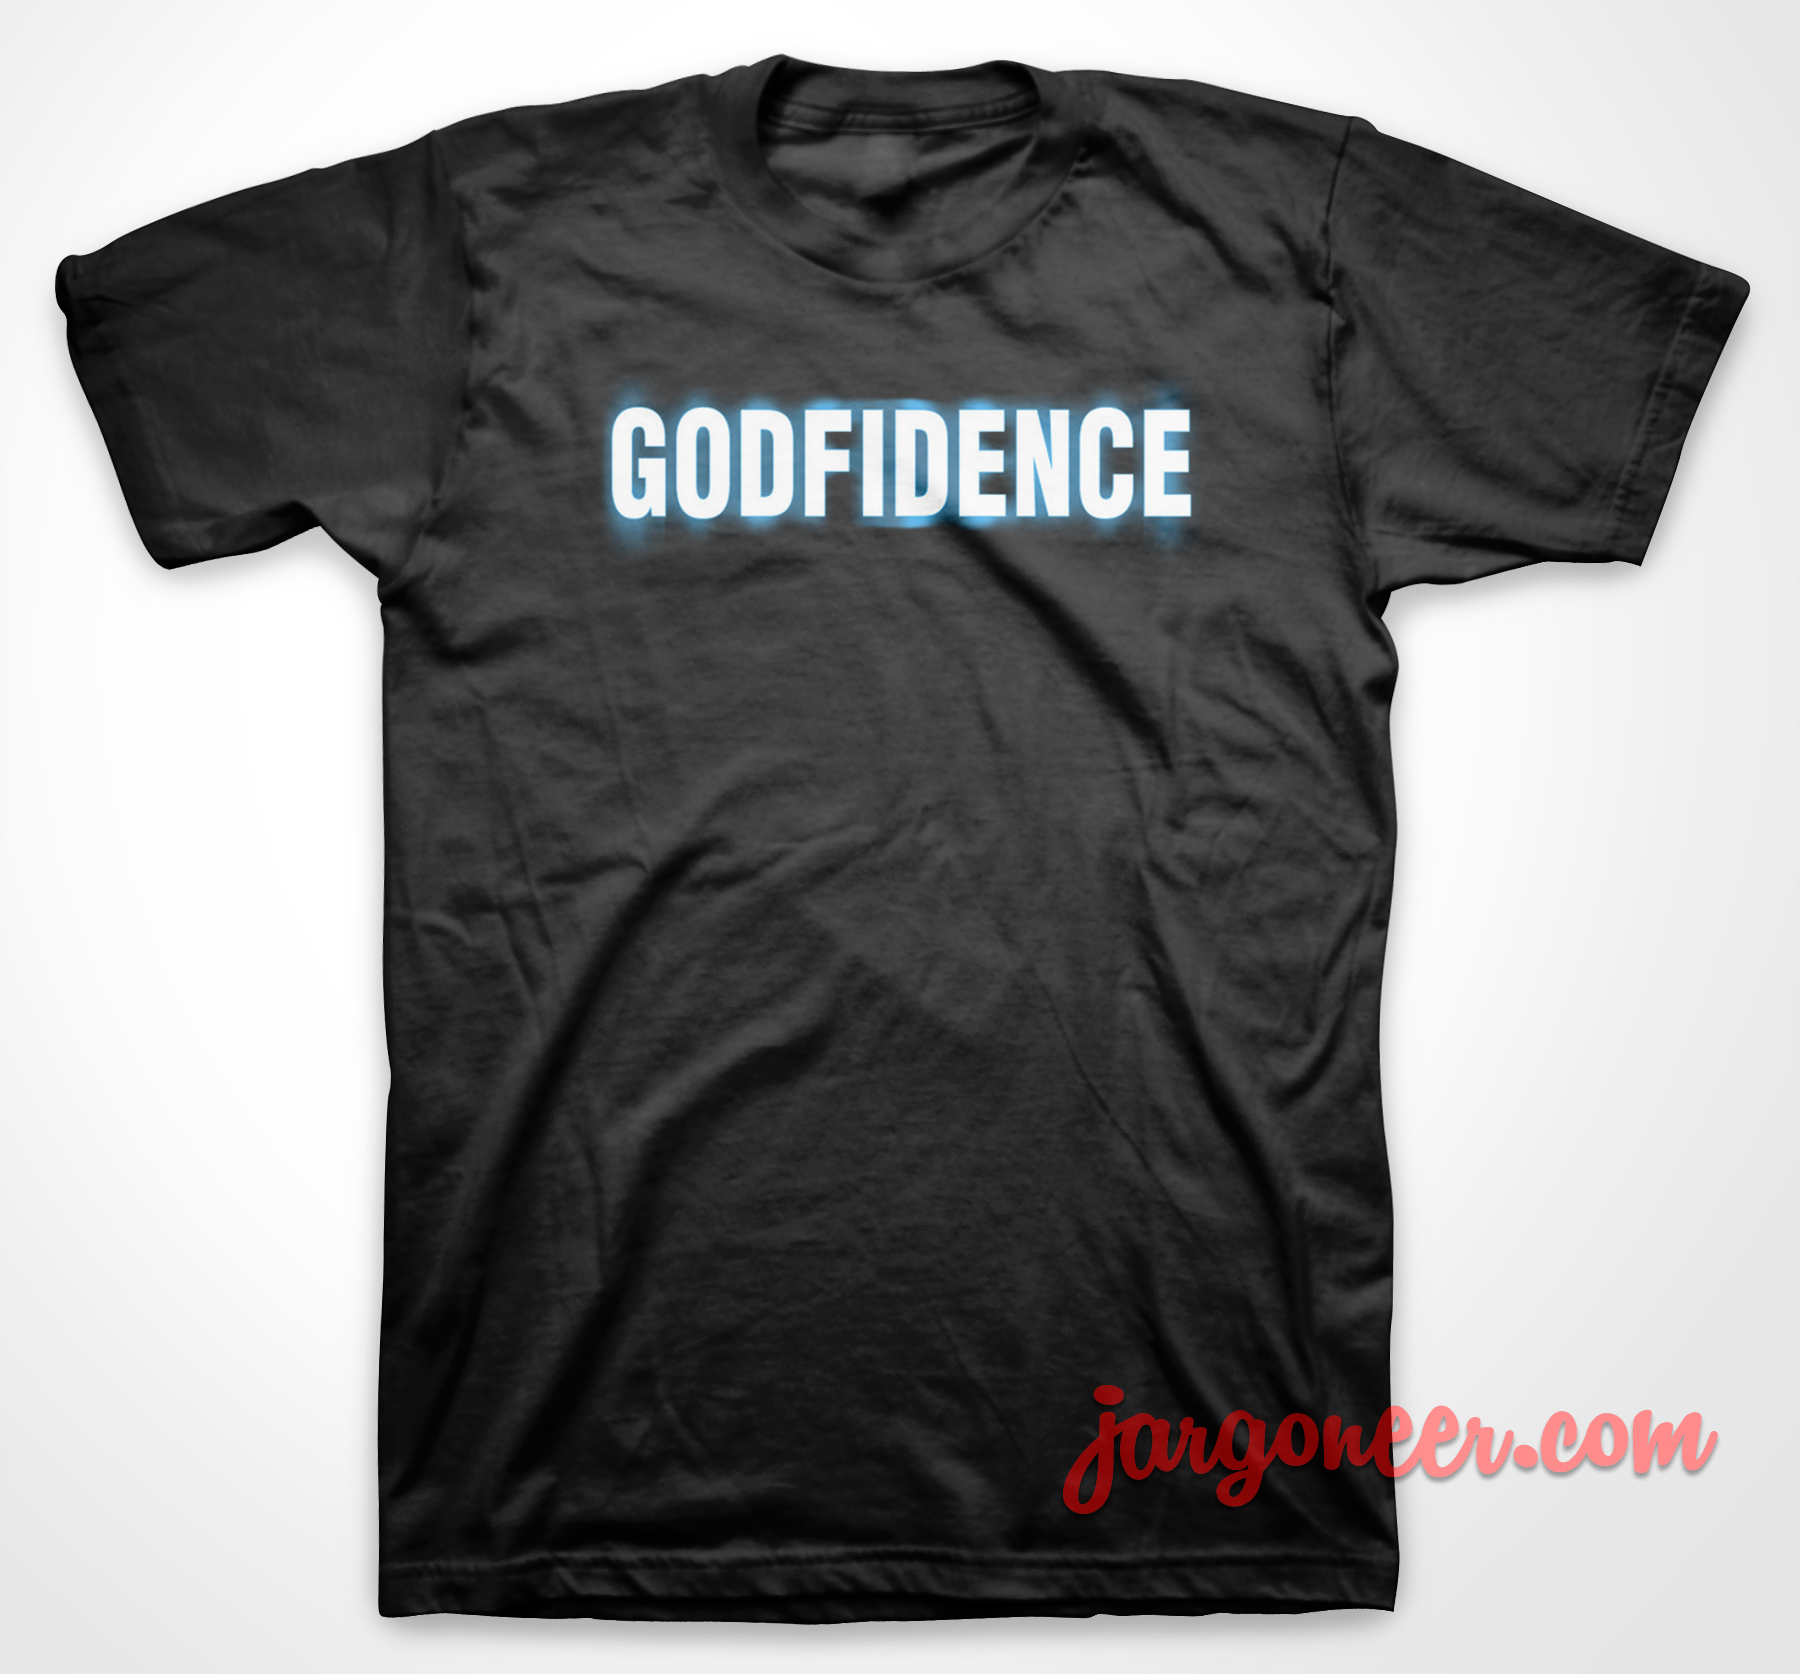 Godfidence - Shop Unique Graphic Cool Shirt Designs